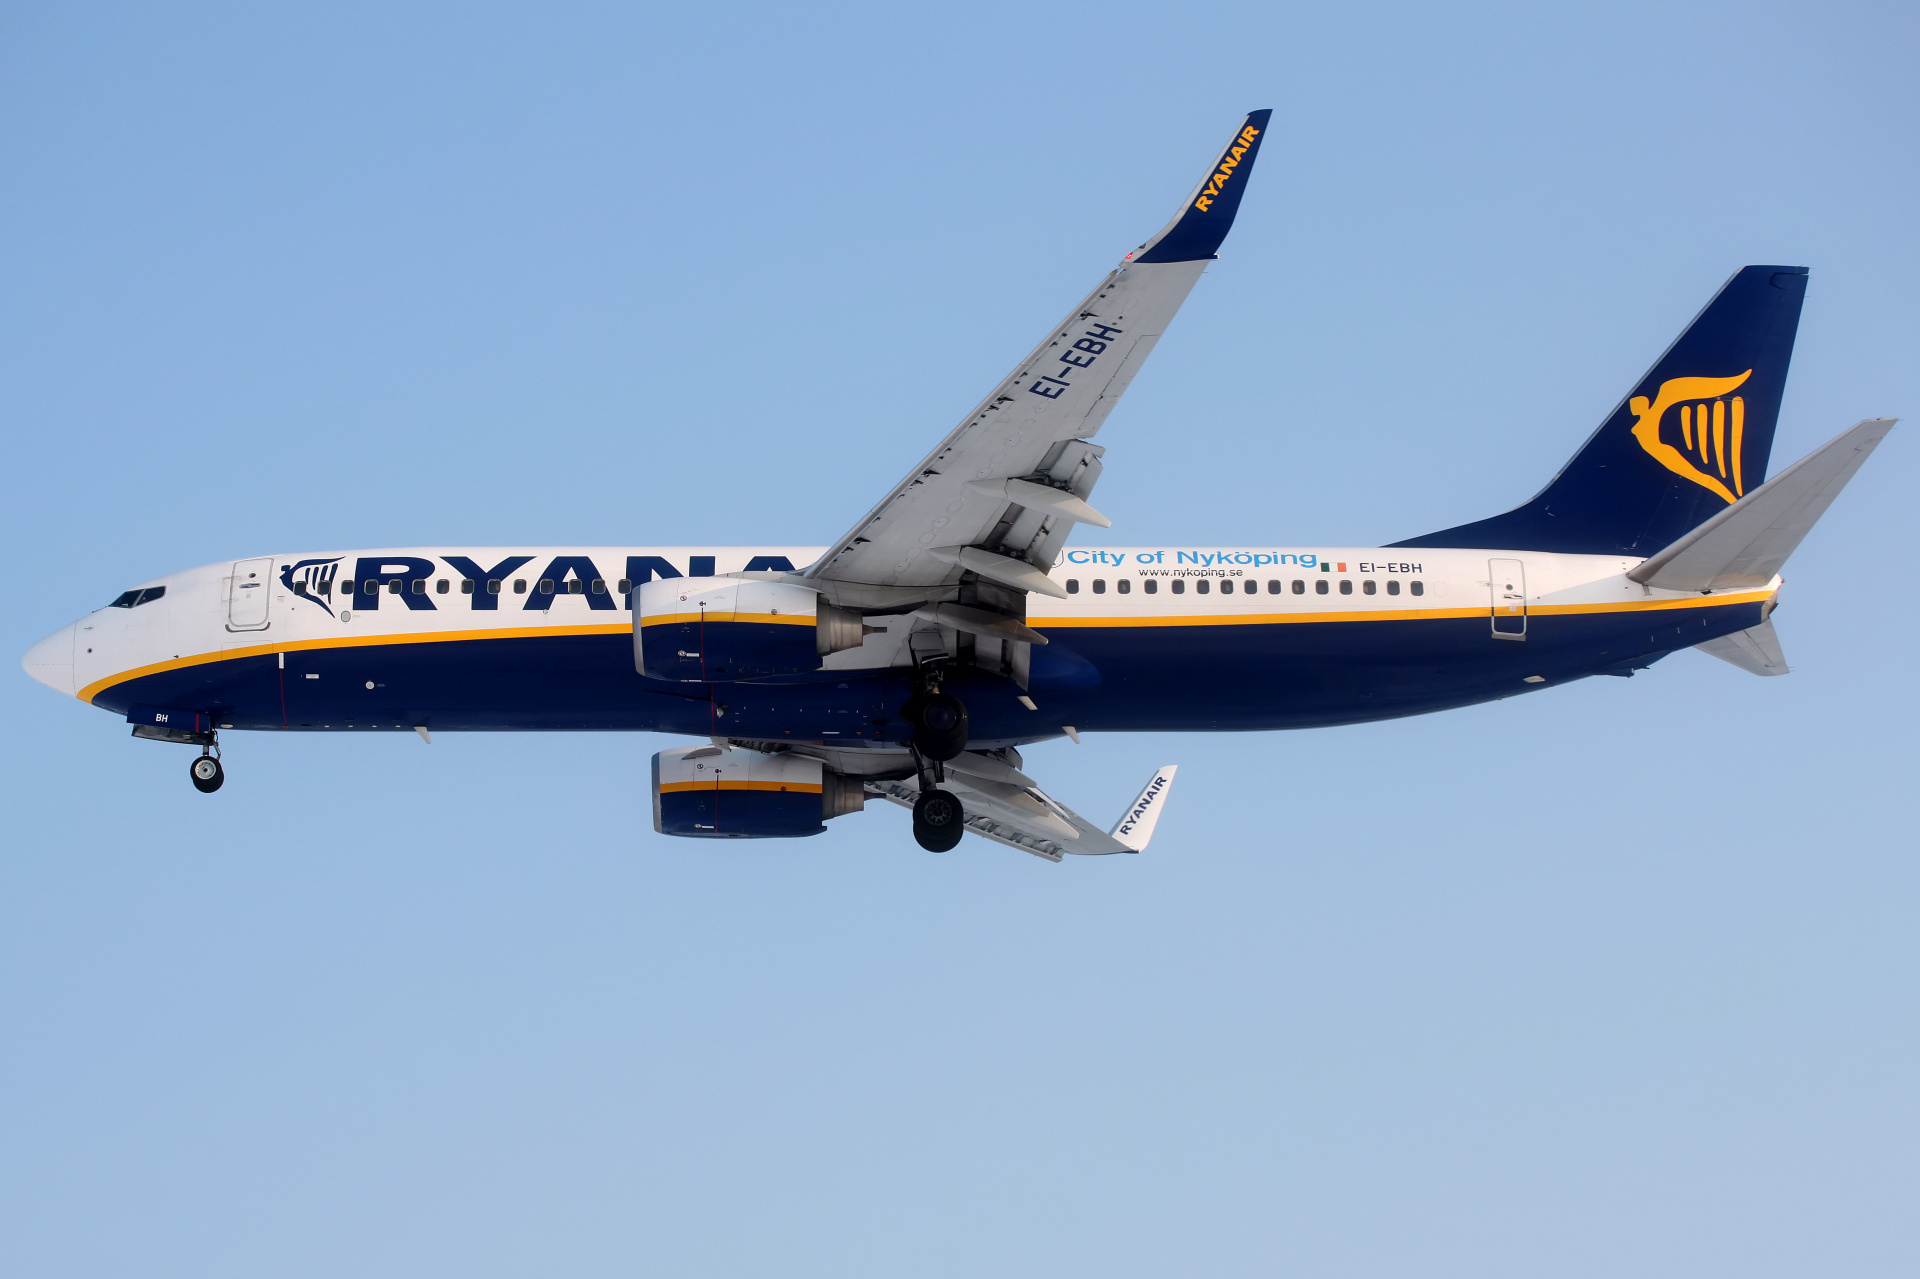 EI-EBH (City of Nyköping sticker) (Aircraft » EPWA Spotting » Boeing 737-800 » Ryanair)